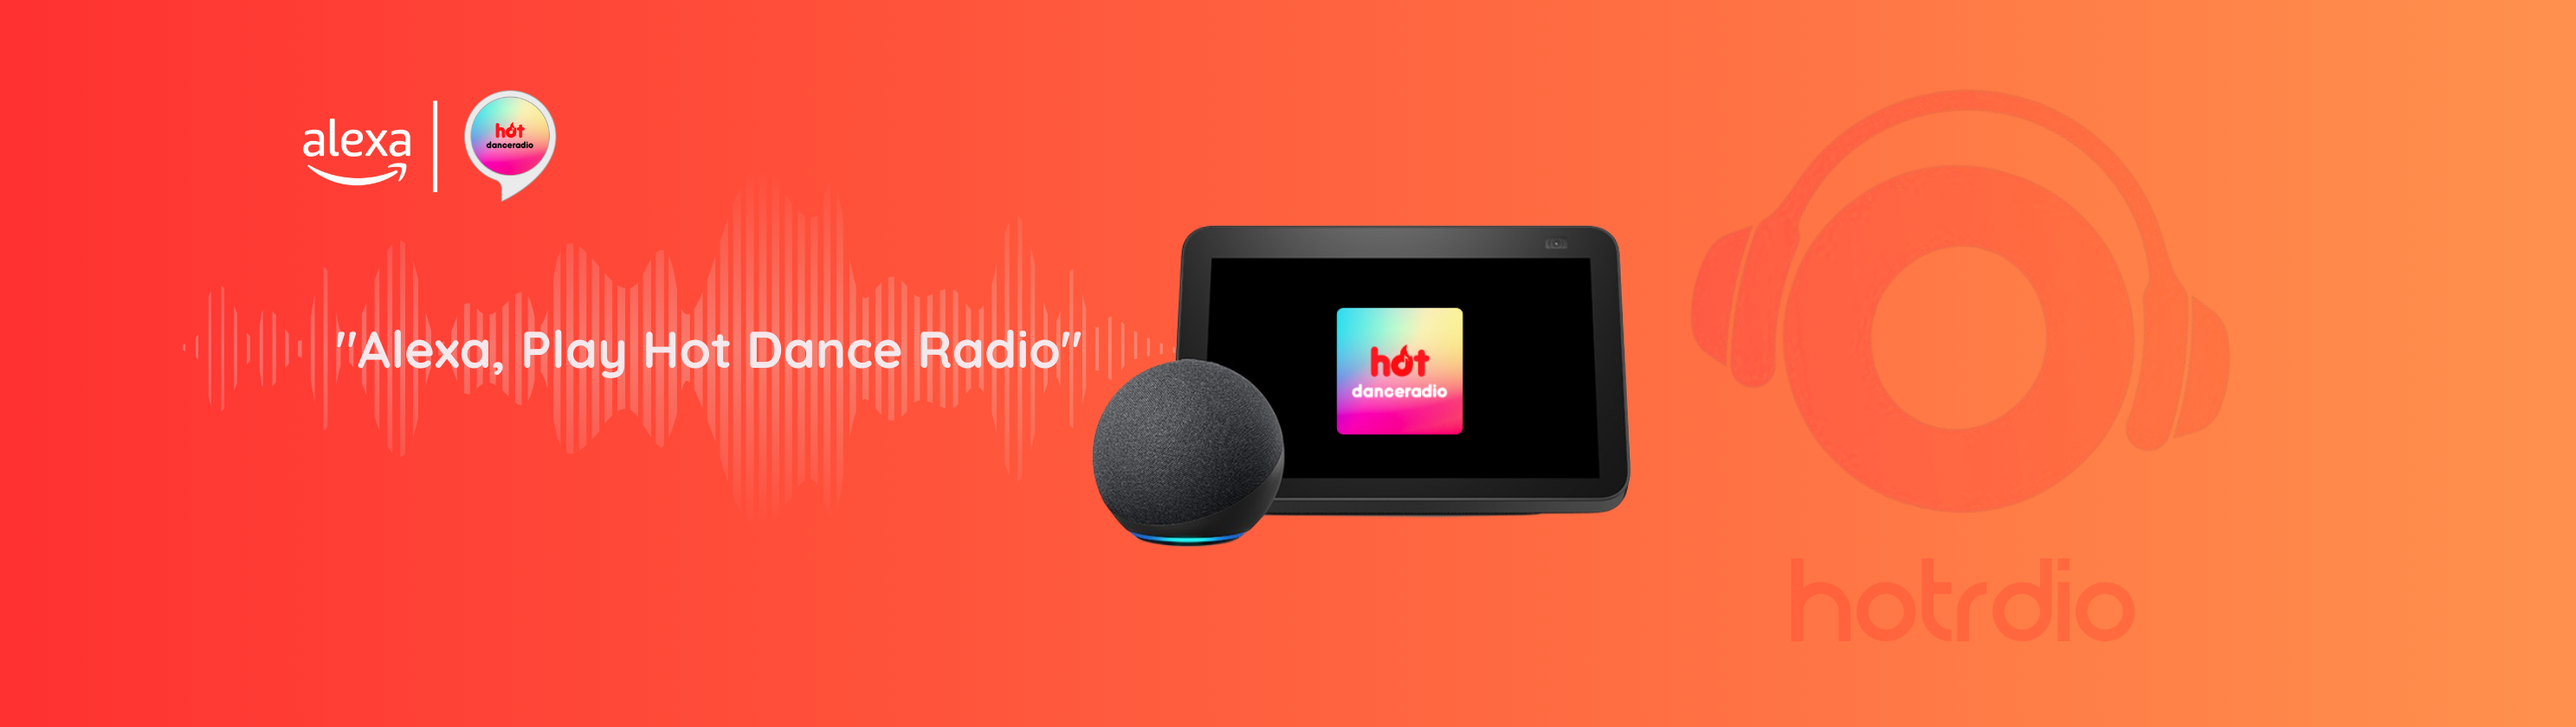 Hot Dance Rádio (Amazon Alexa)